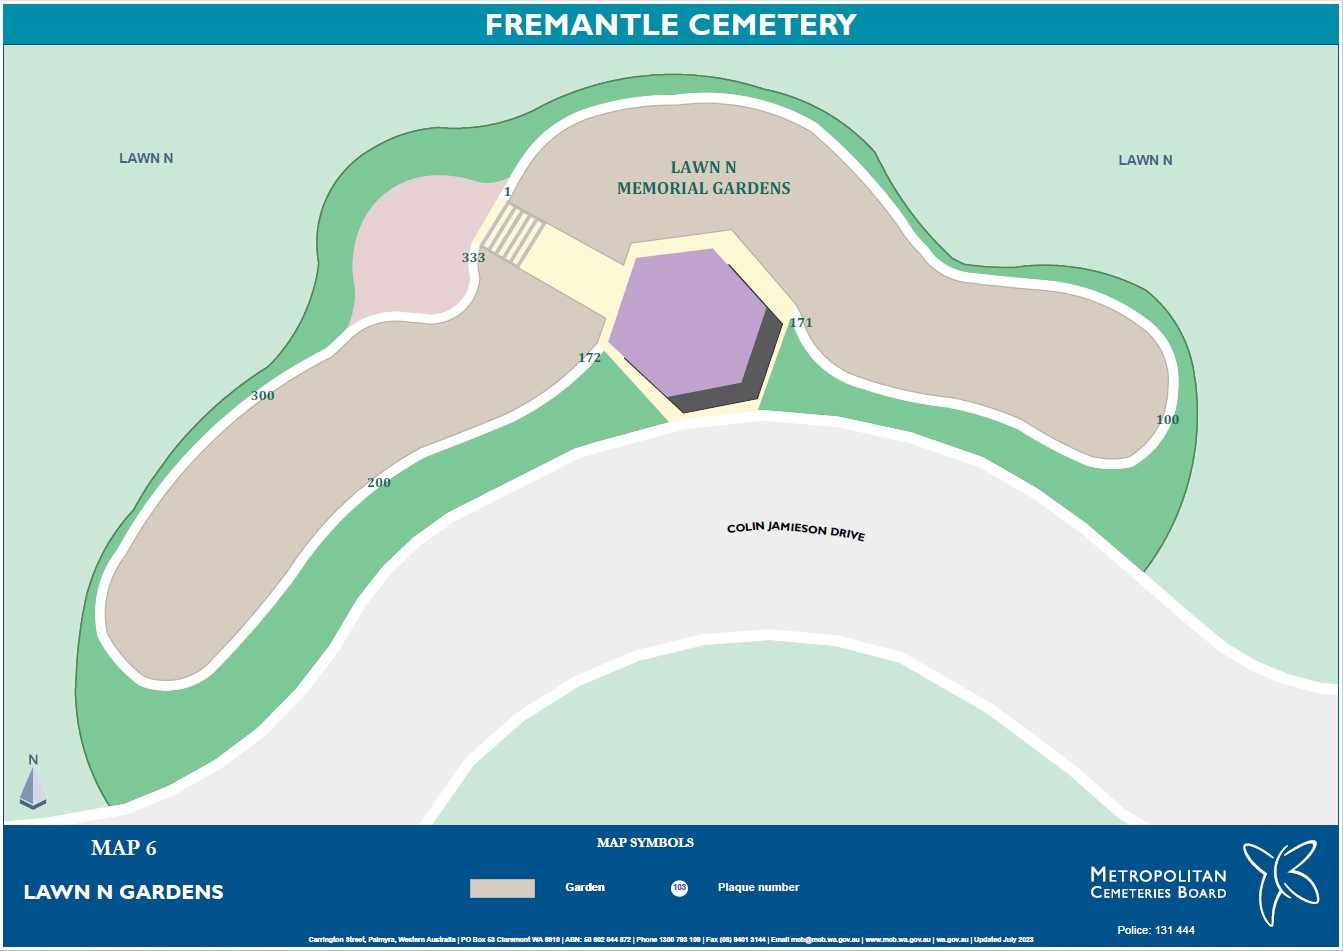 Map 6 Lawn N Gardens Fremantle Cemetery